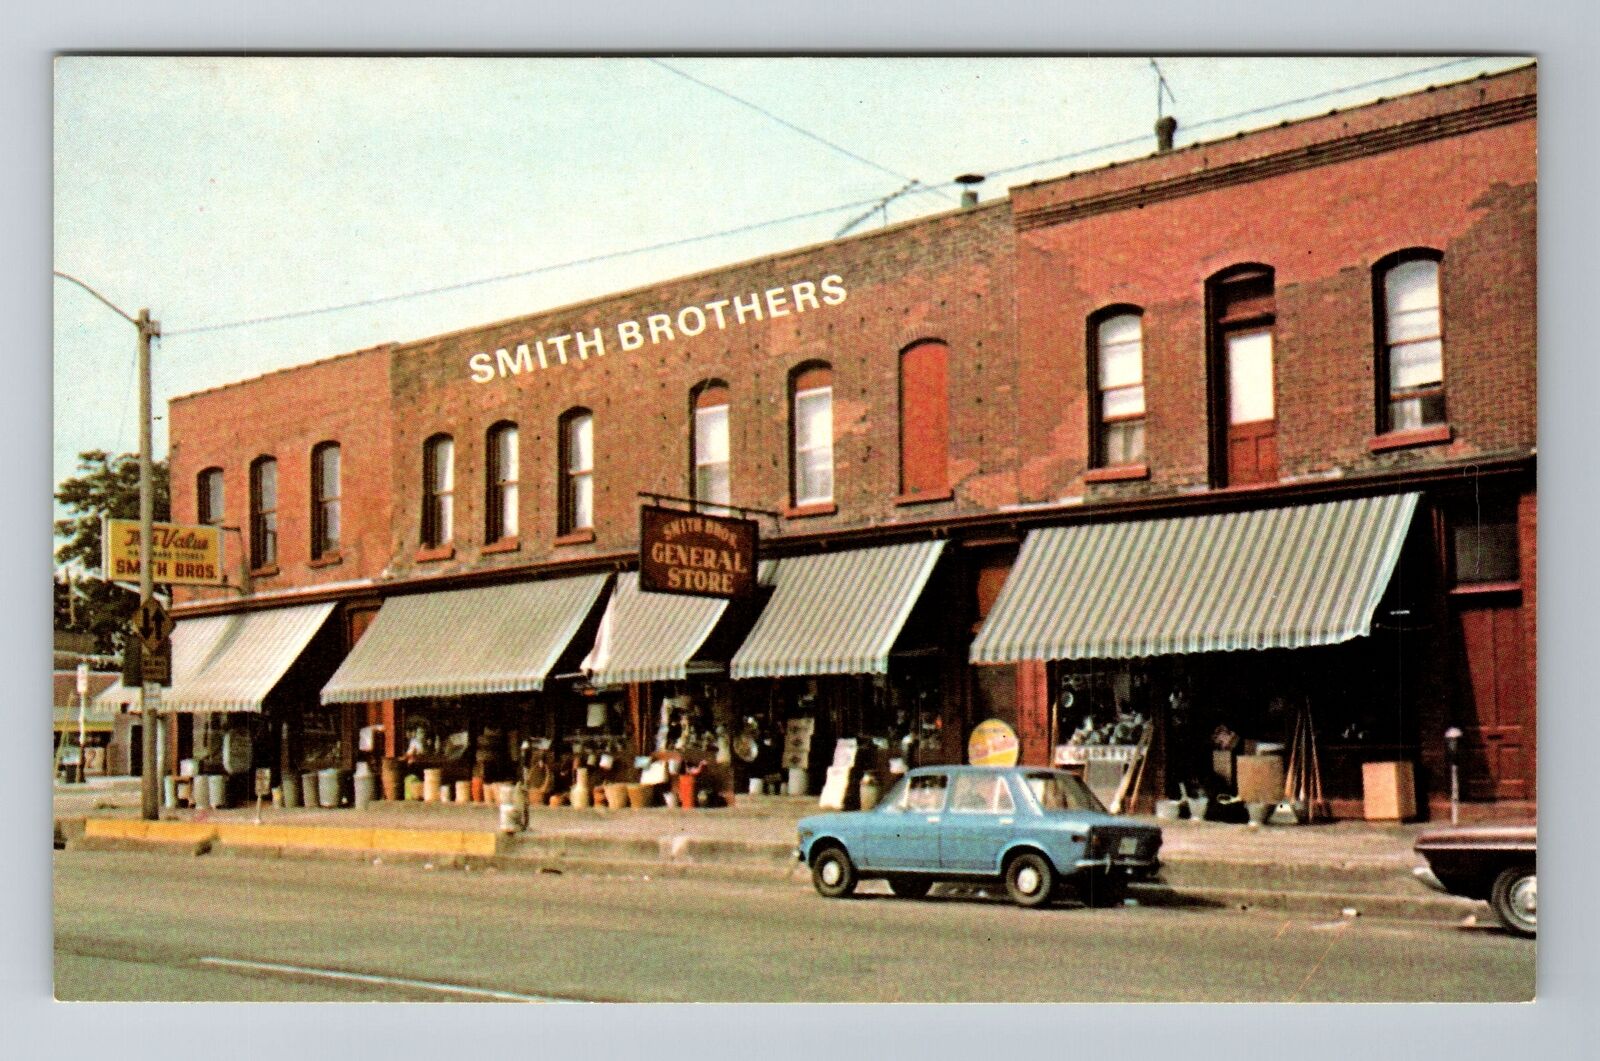 Clinton IA-Iowa, Smith Brothers General Store, Antique Souvenir Vintage Postcard